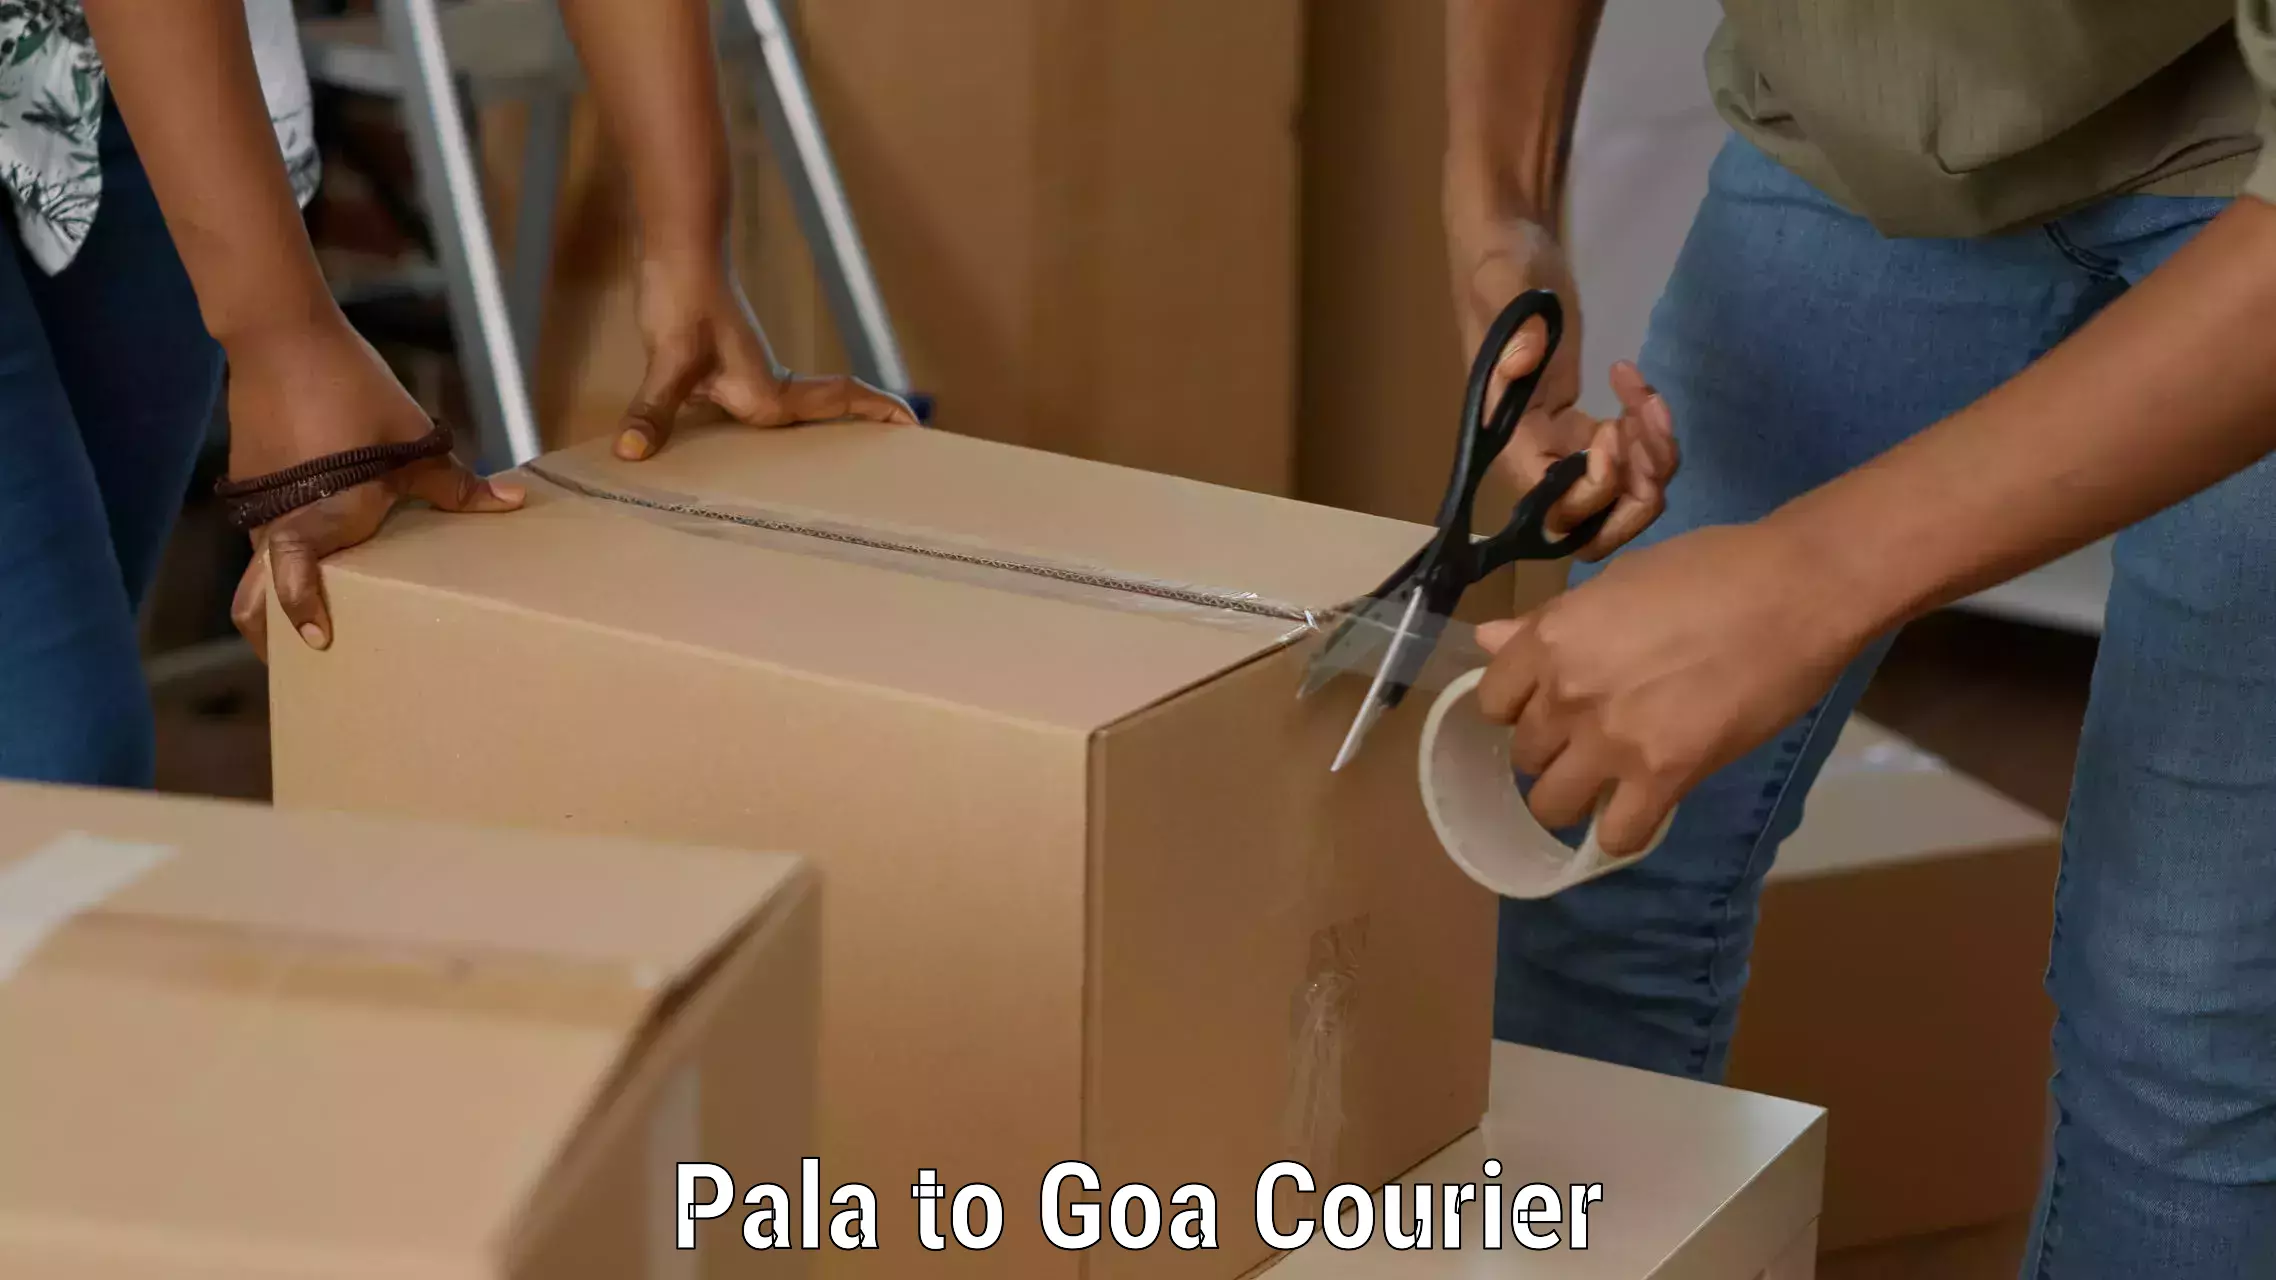 Advanced shipping technology Pala to Goa